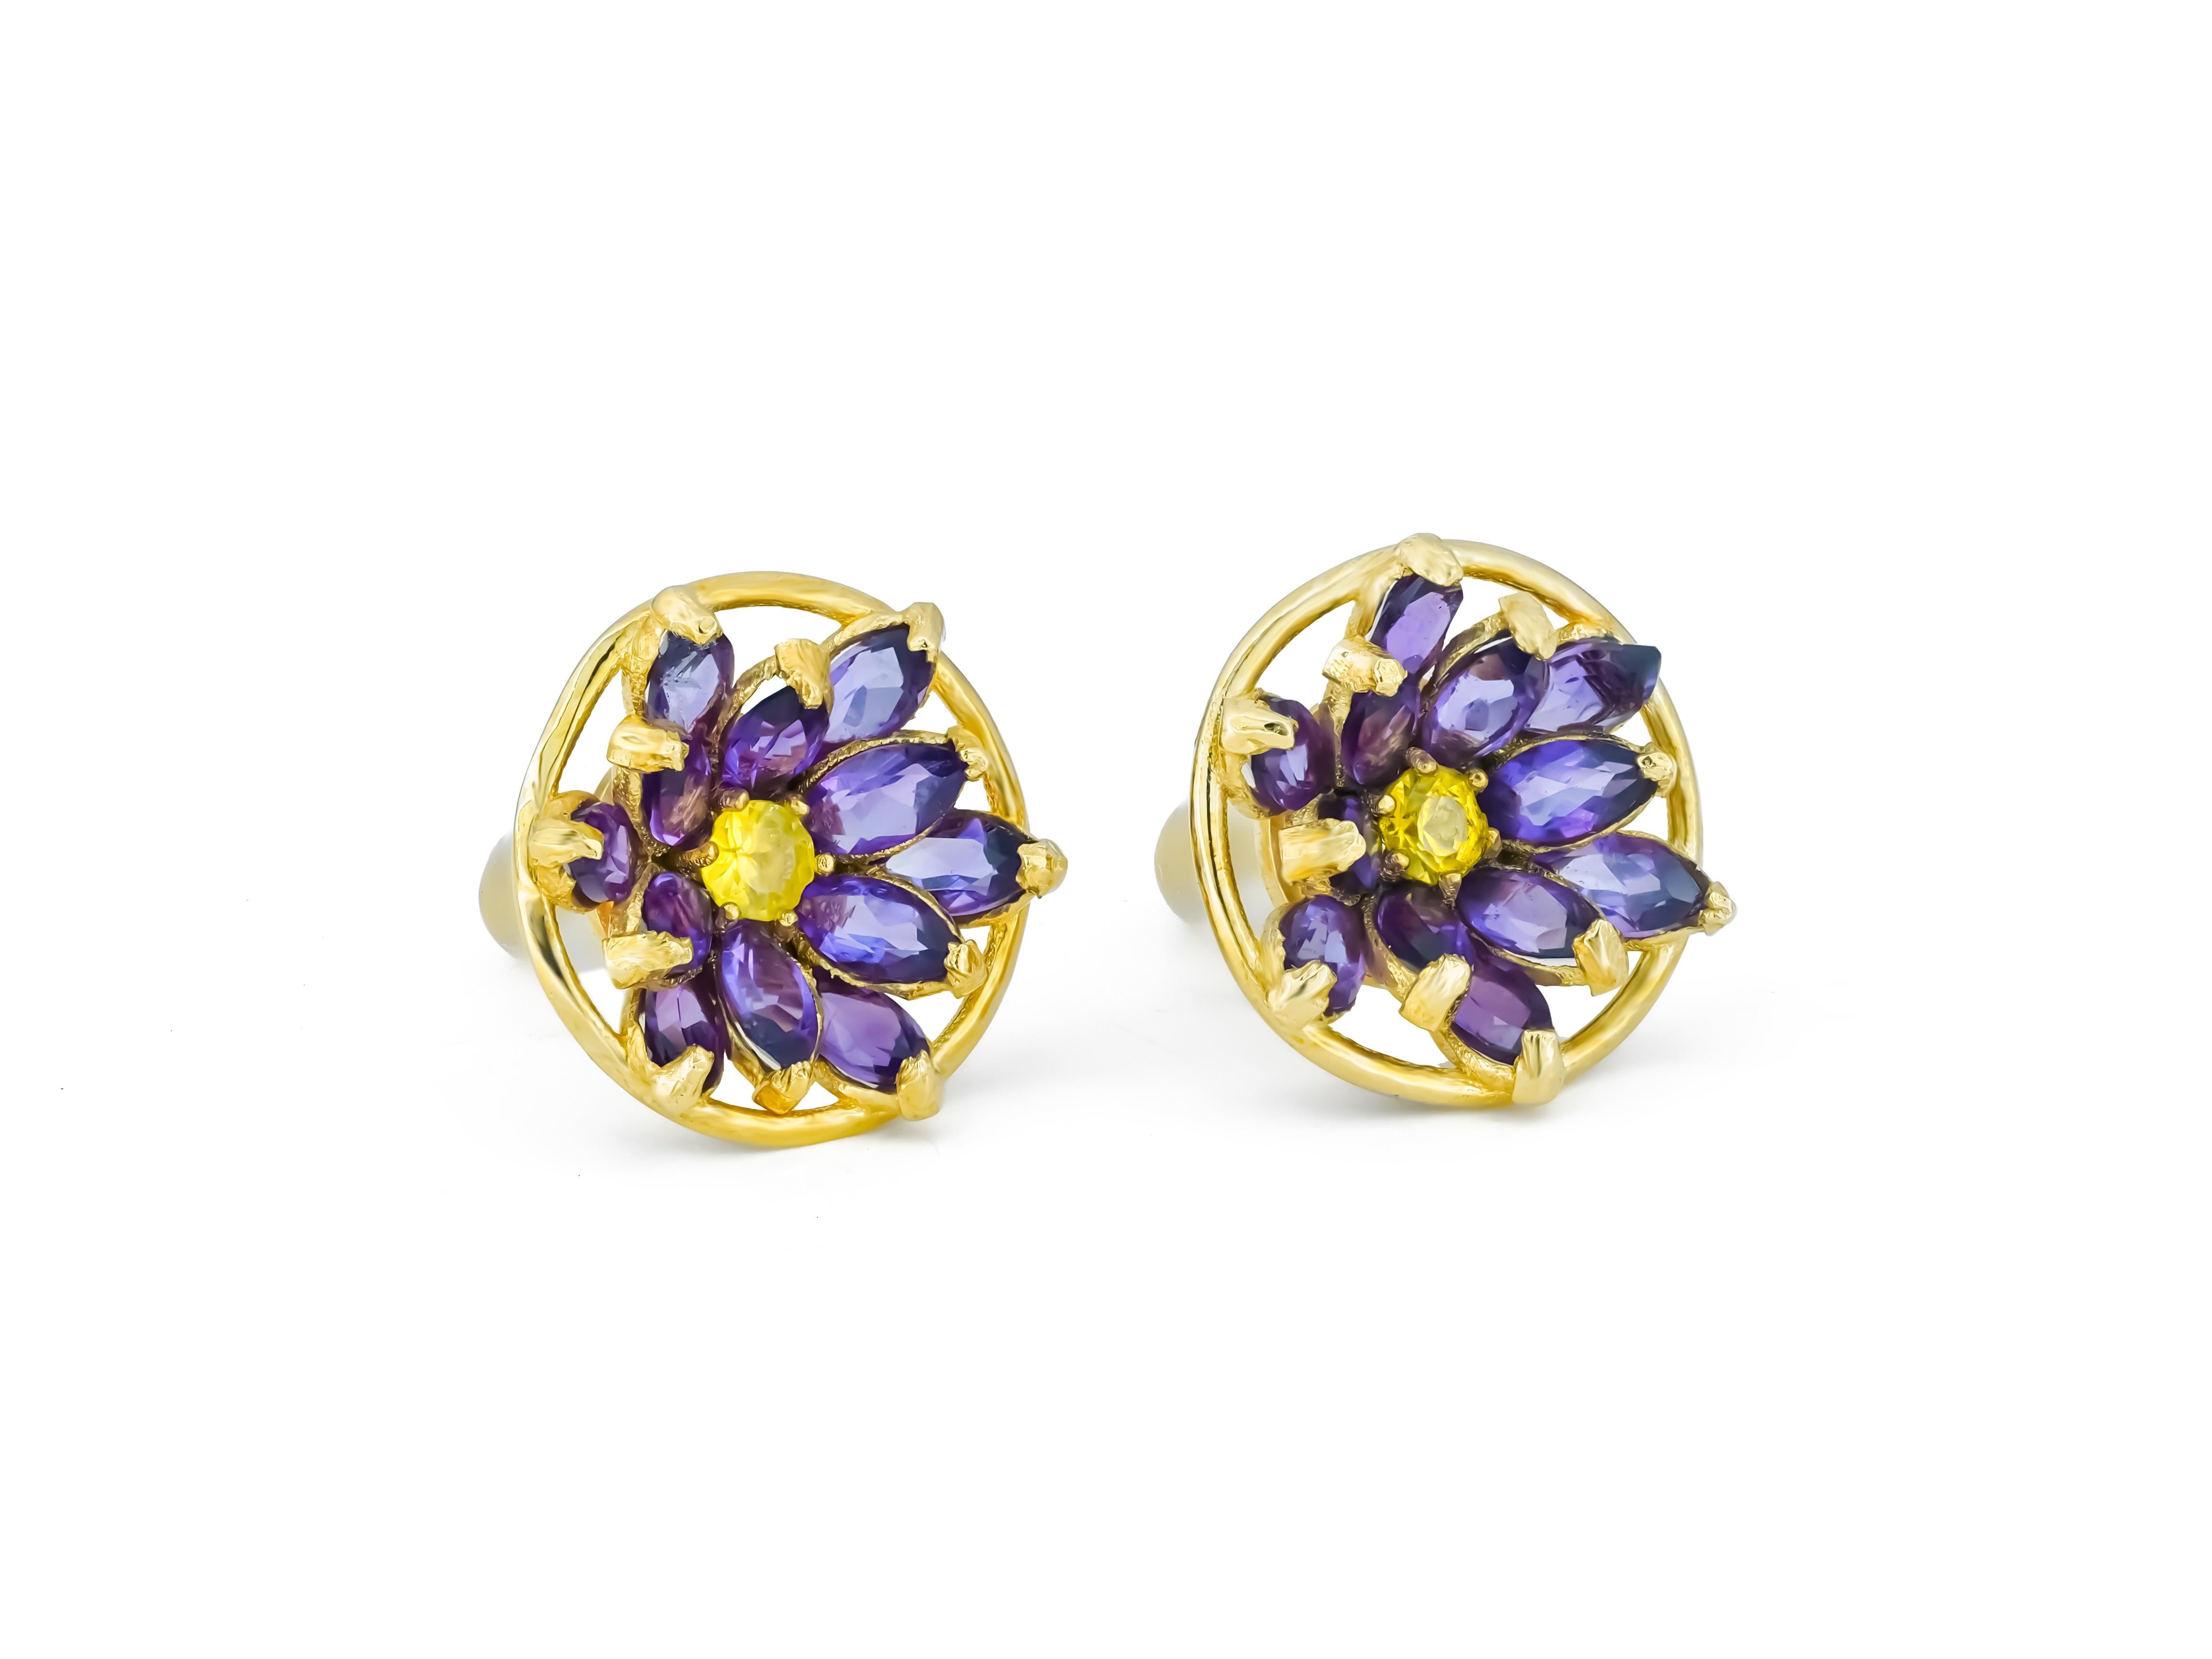 Lotus Flower Earrings Studs in 14K Gold, Amethyst and Sapphires Earrings! For Sale 6